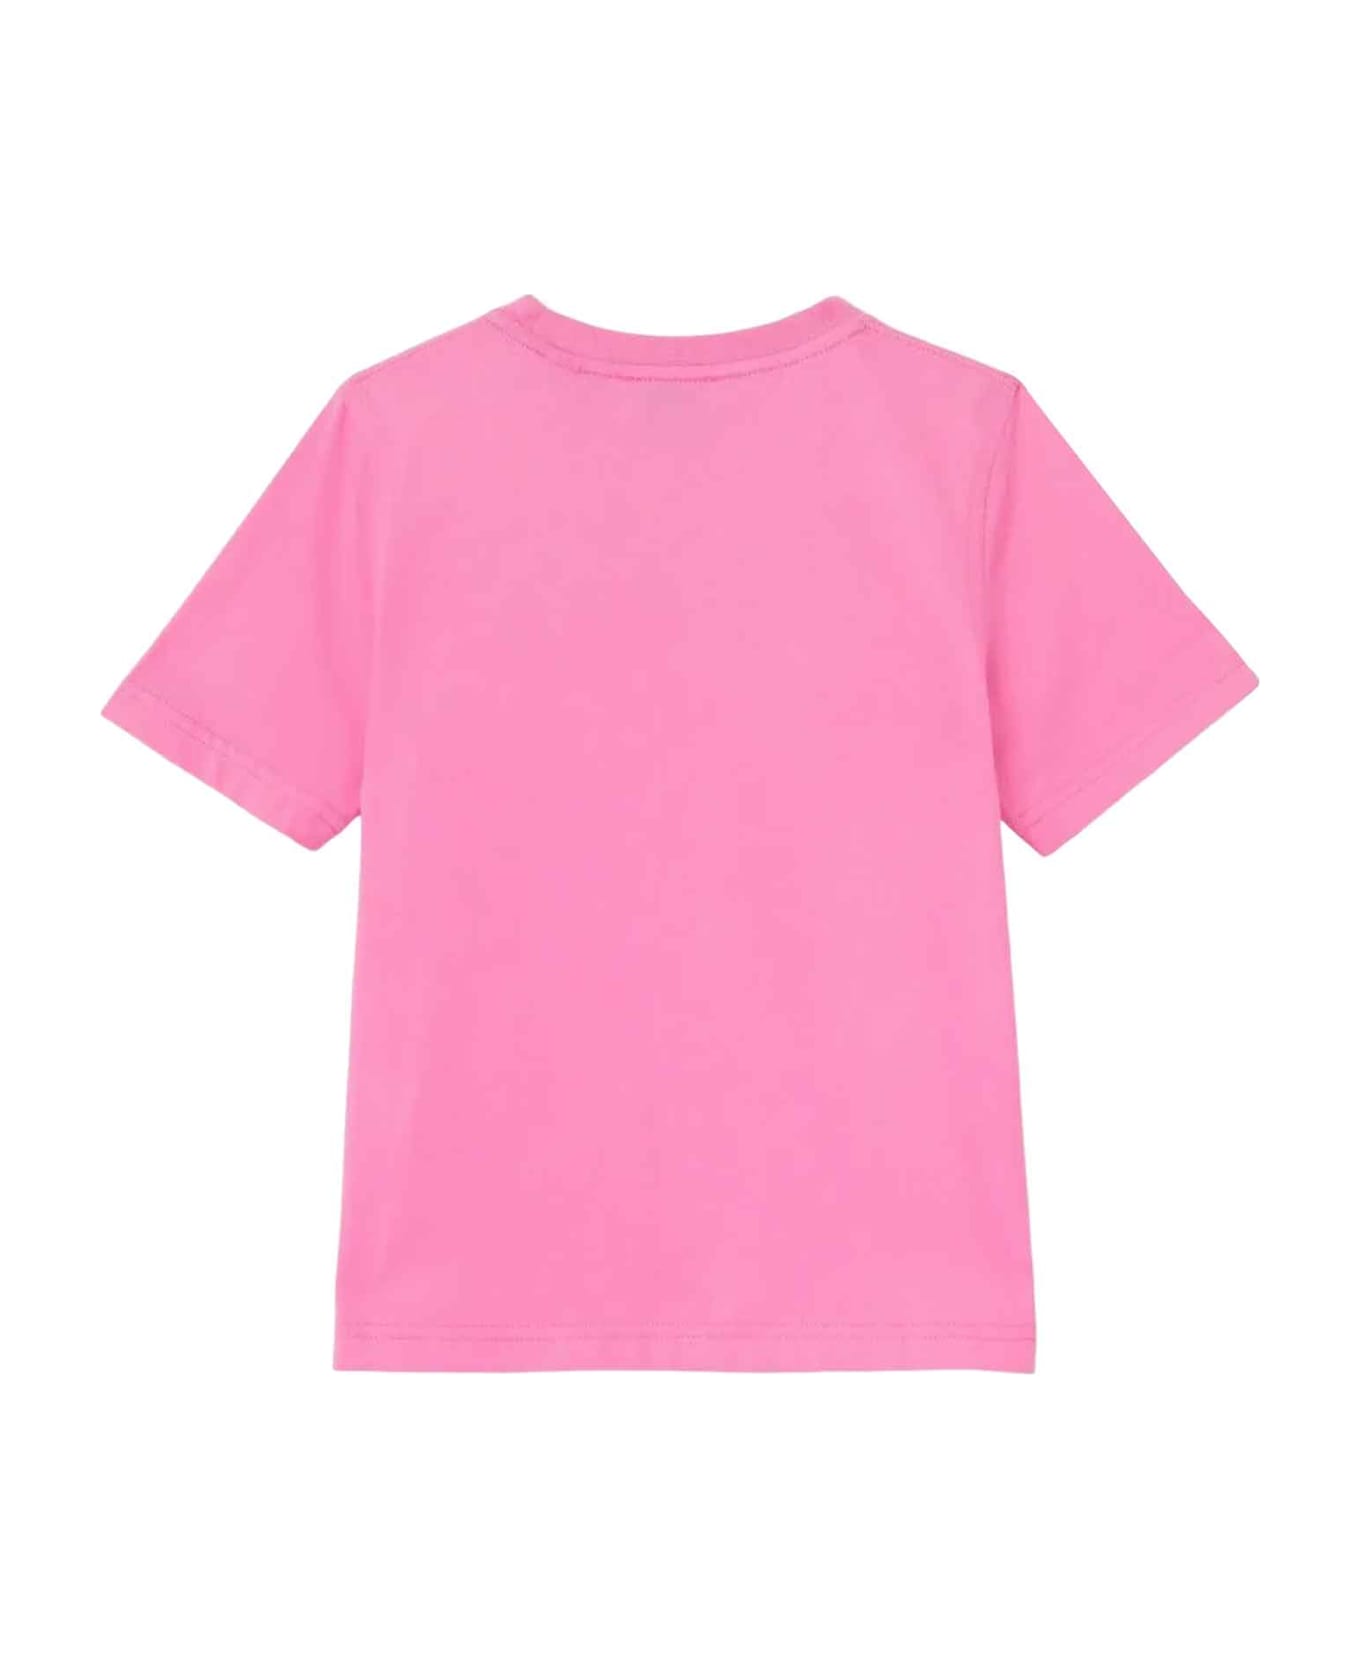 Burberry Pink T-shirt Girl - Rosa